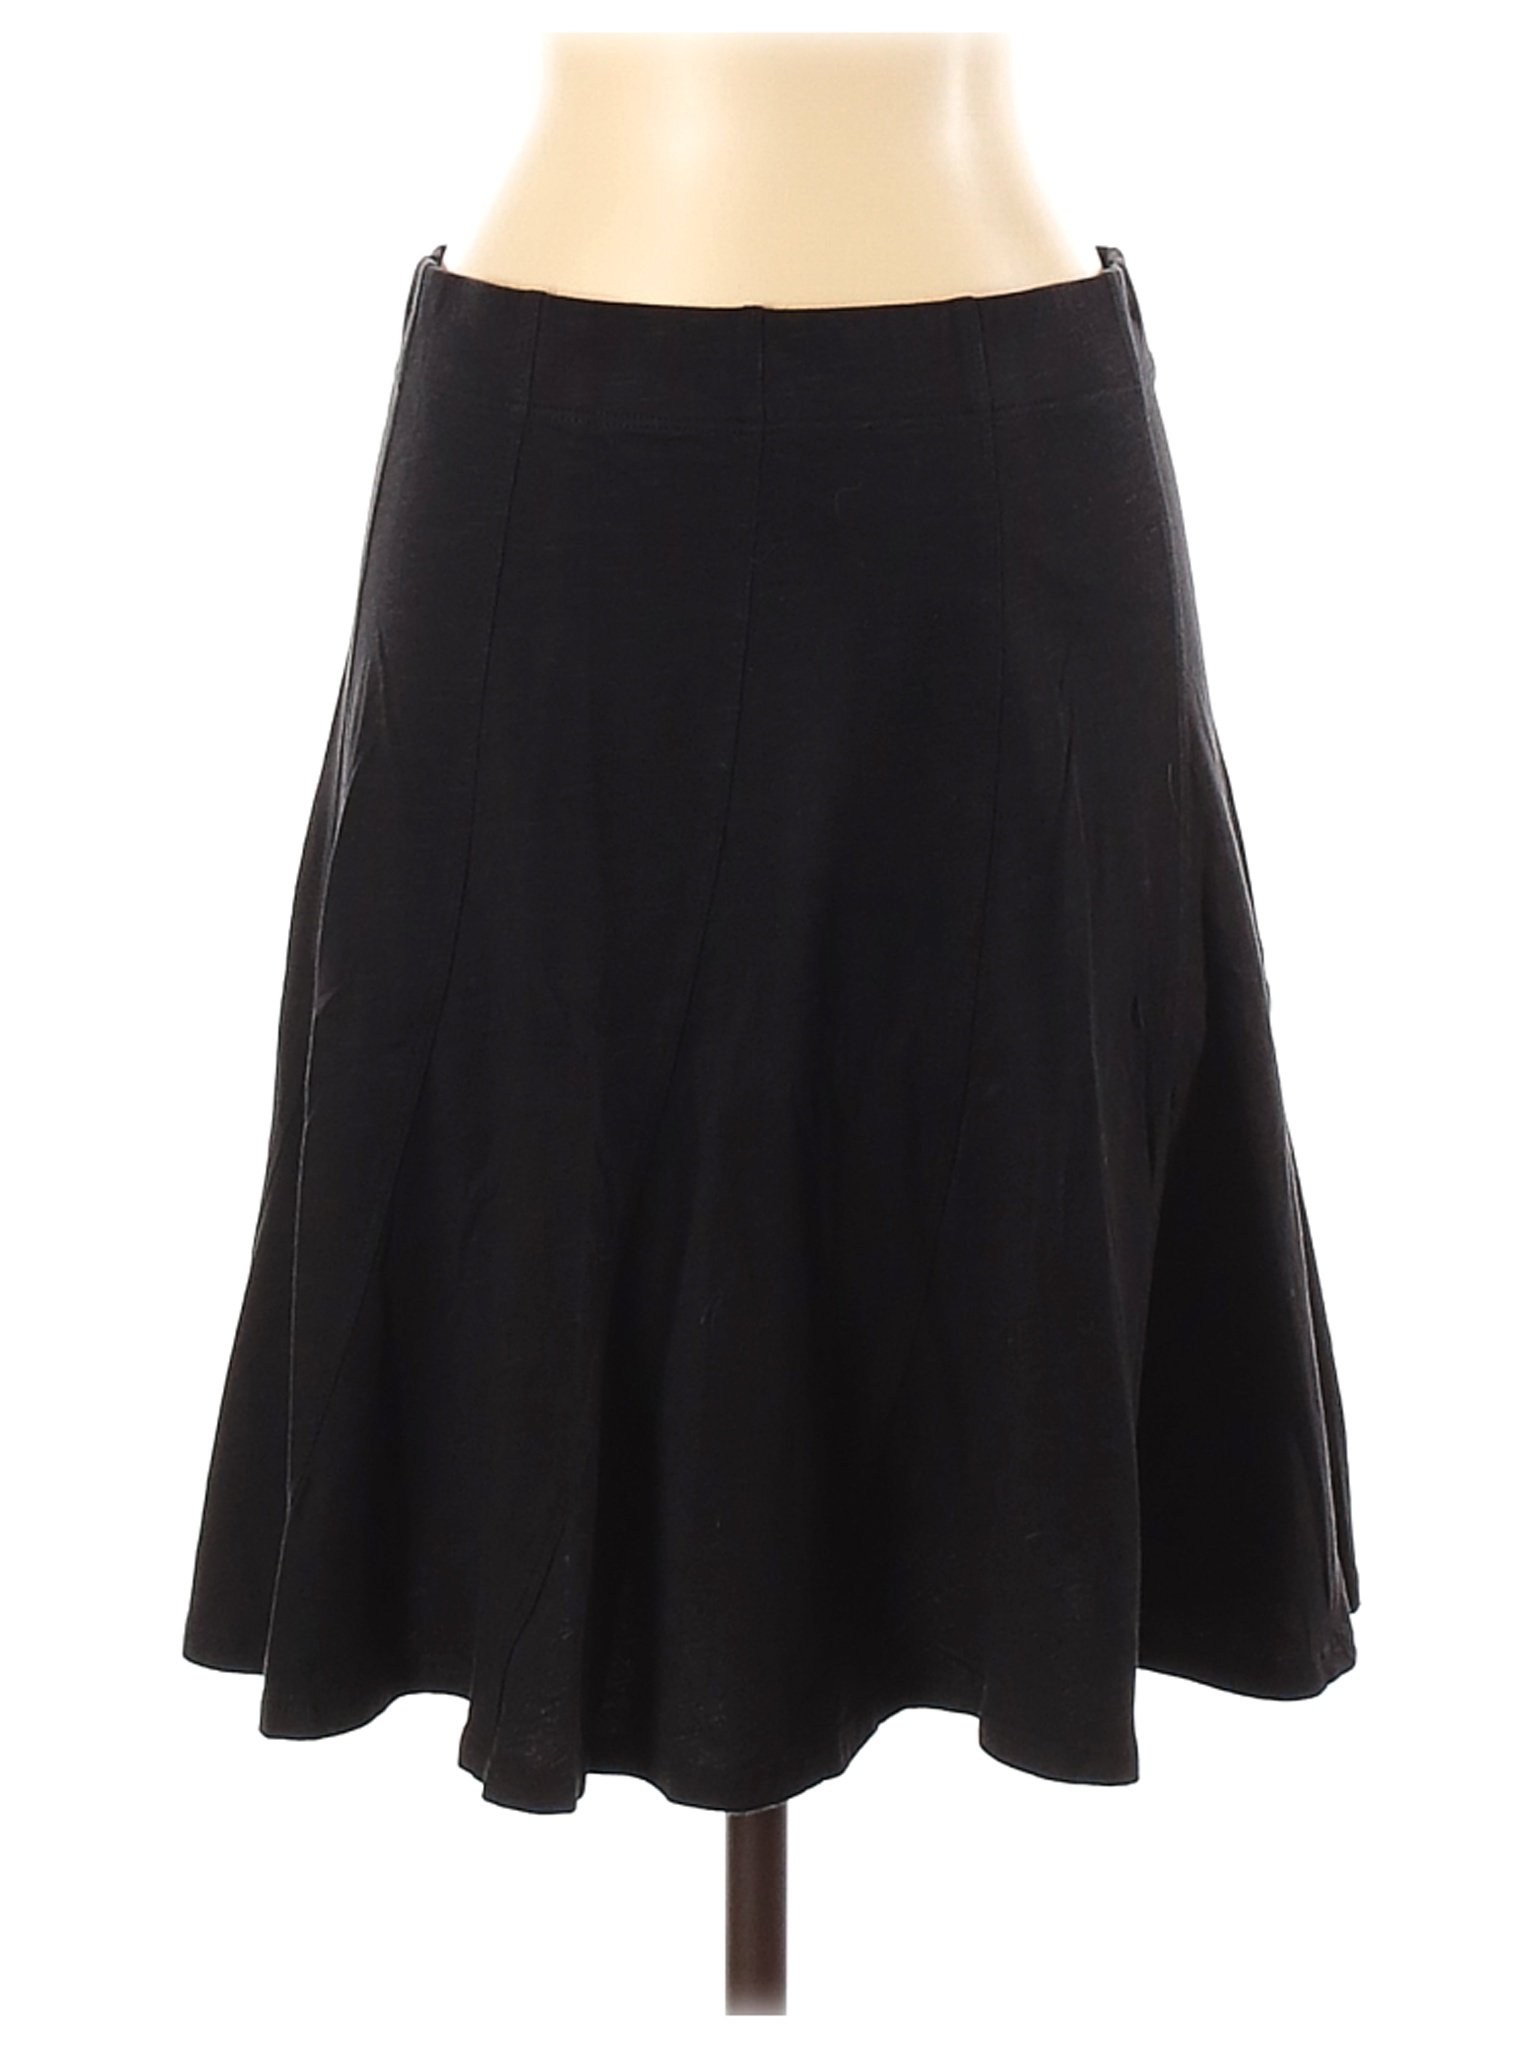 Toad & Co Women Black Casual Skirt S | eBay